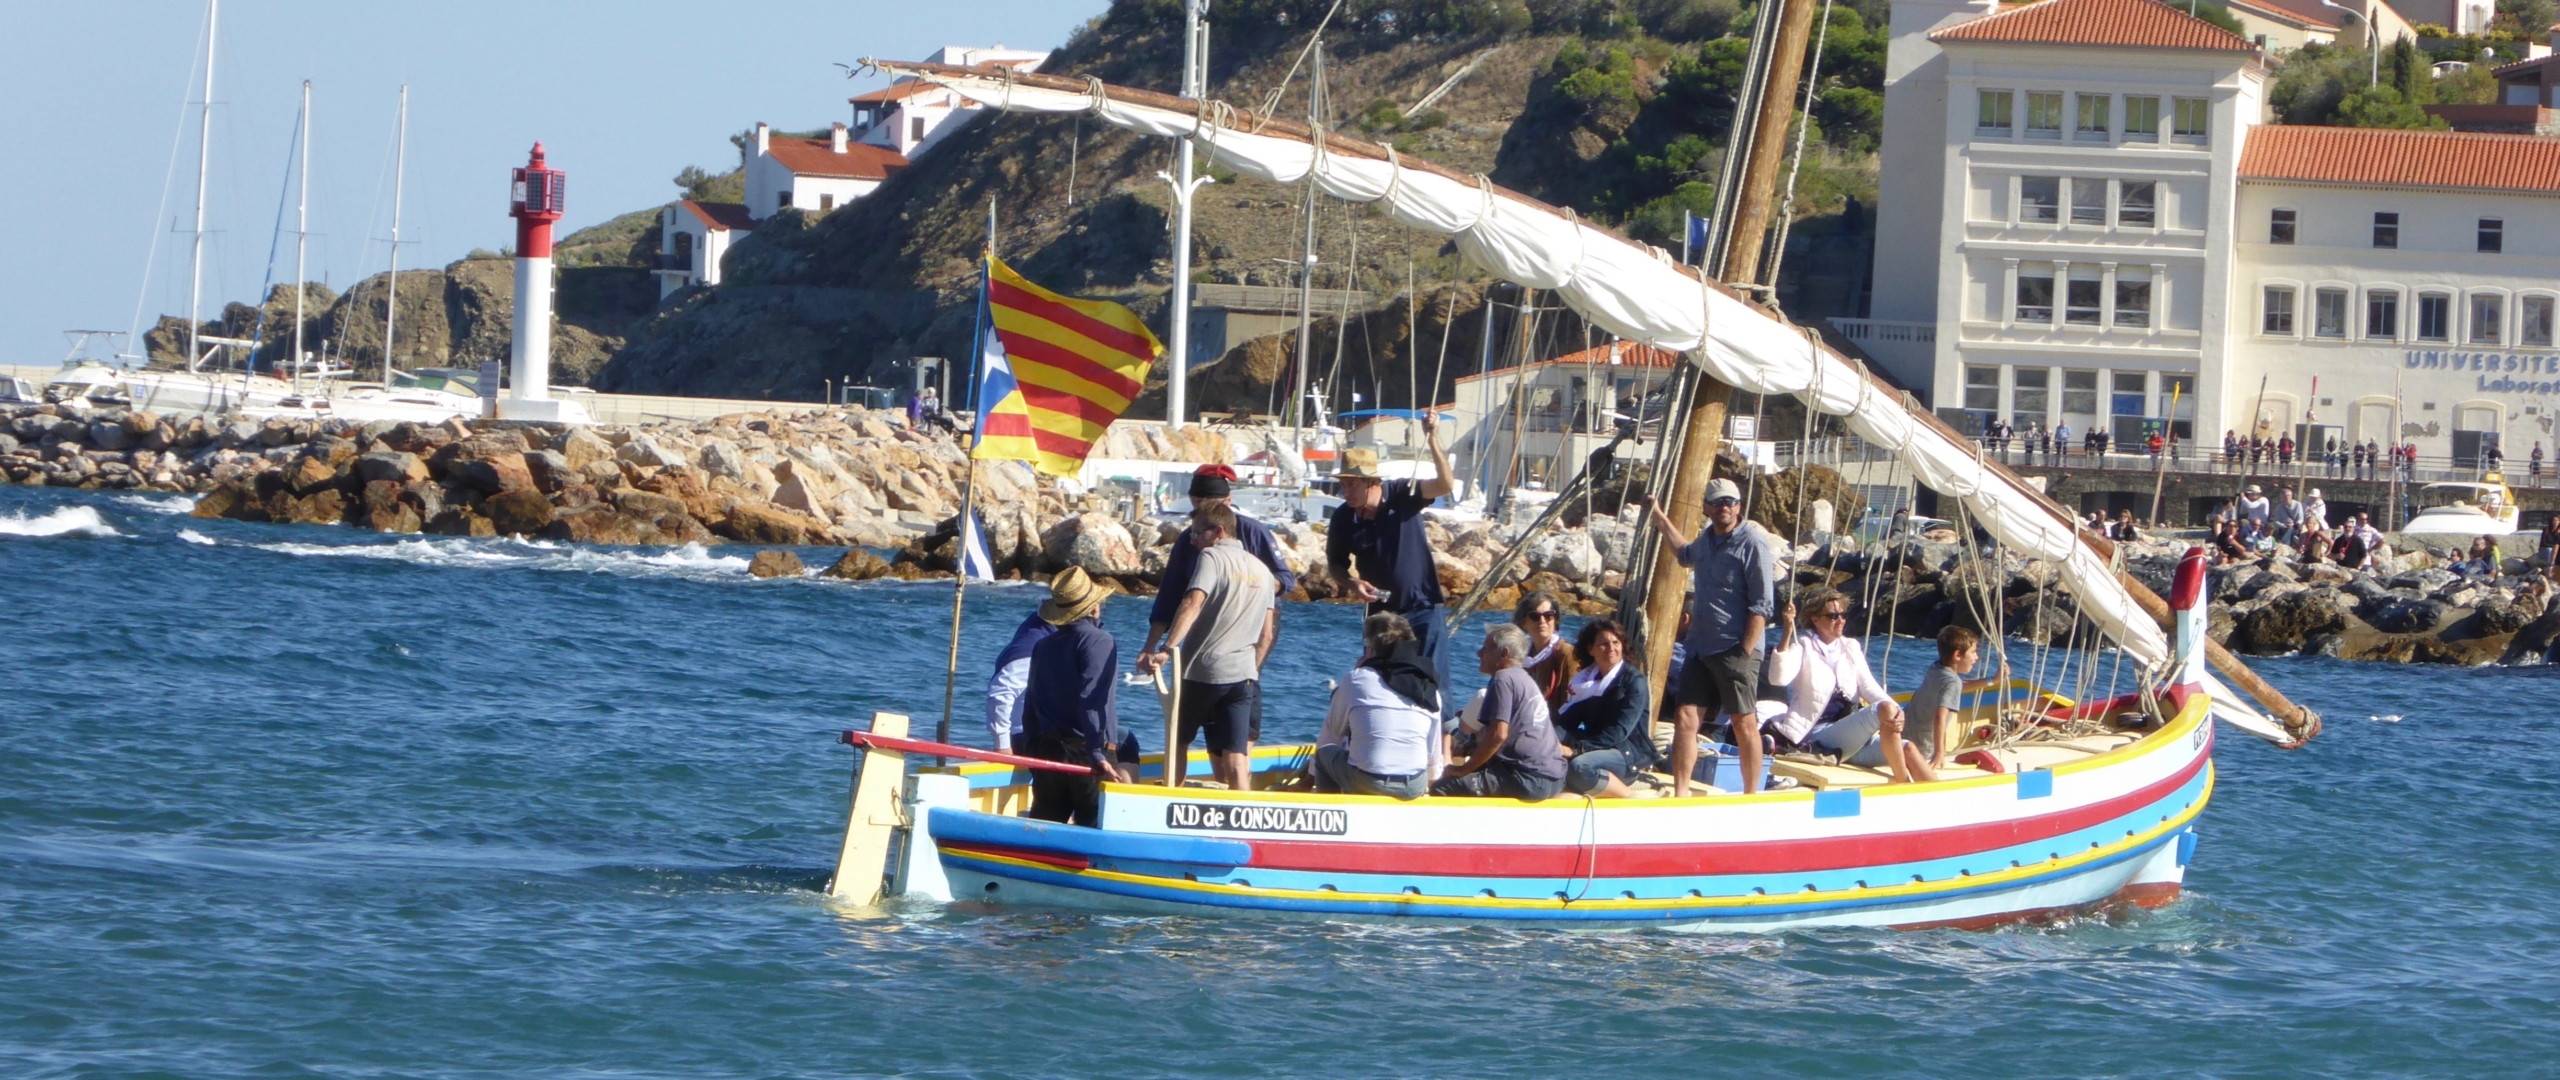 Catalan barque Banyuls